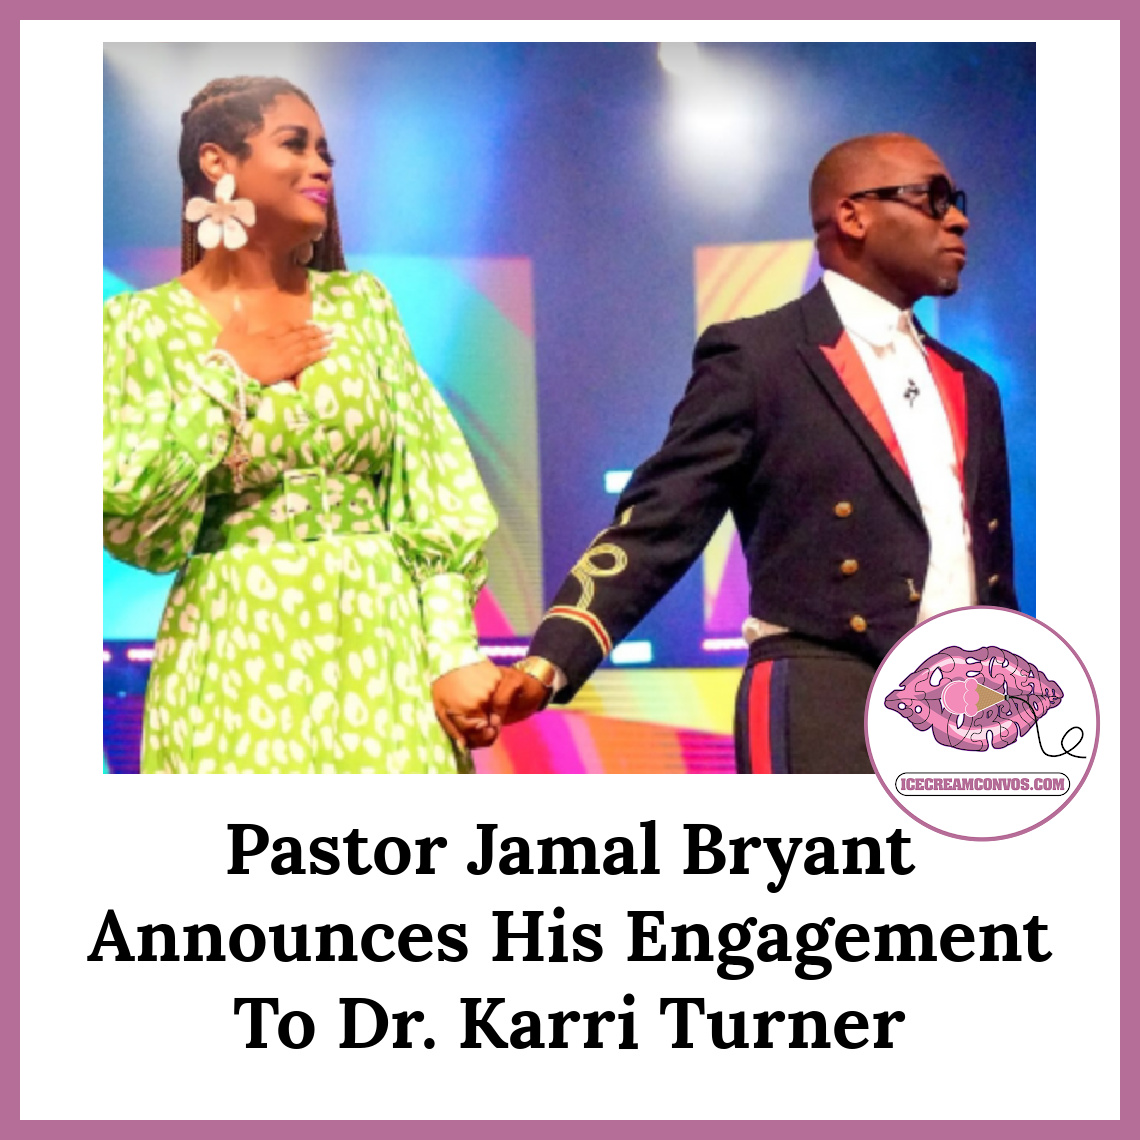 Pastor Jamal Bryant of New Birth Missionary Baptist Church announced his engagement to Dr. Karri Turner on Sunday. 💍🎉🖤🍦 bit.ly/4aSnkY9

#PastorJamalBryant #DrKarriTurner #Engaged #Congrats #IceCreamConvos